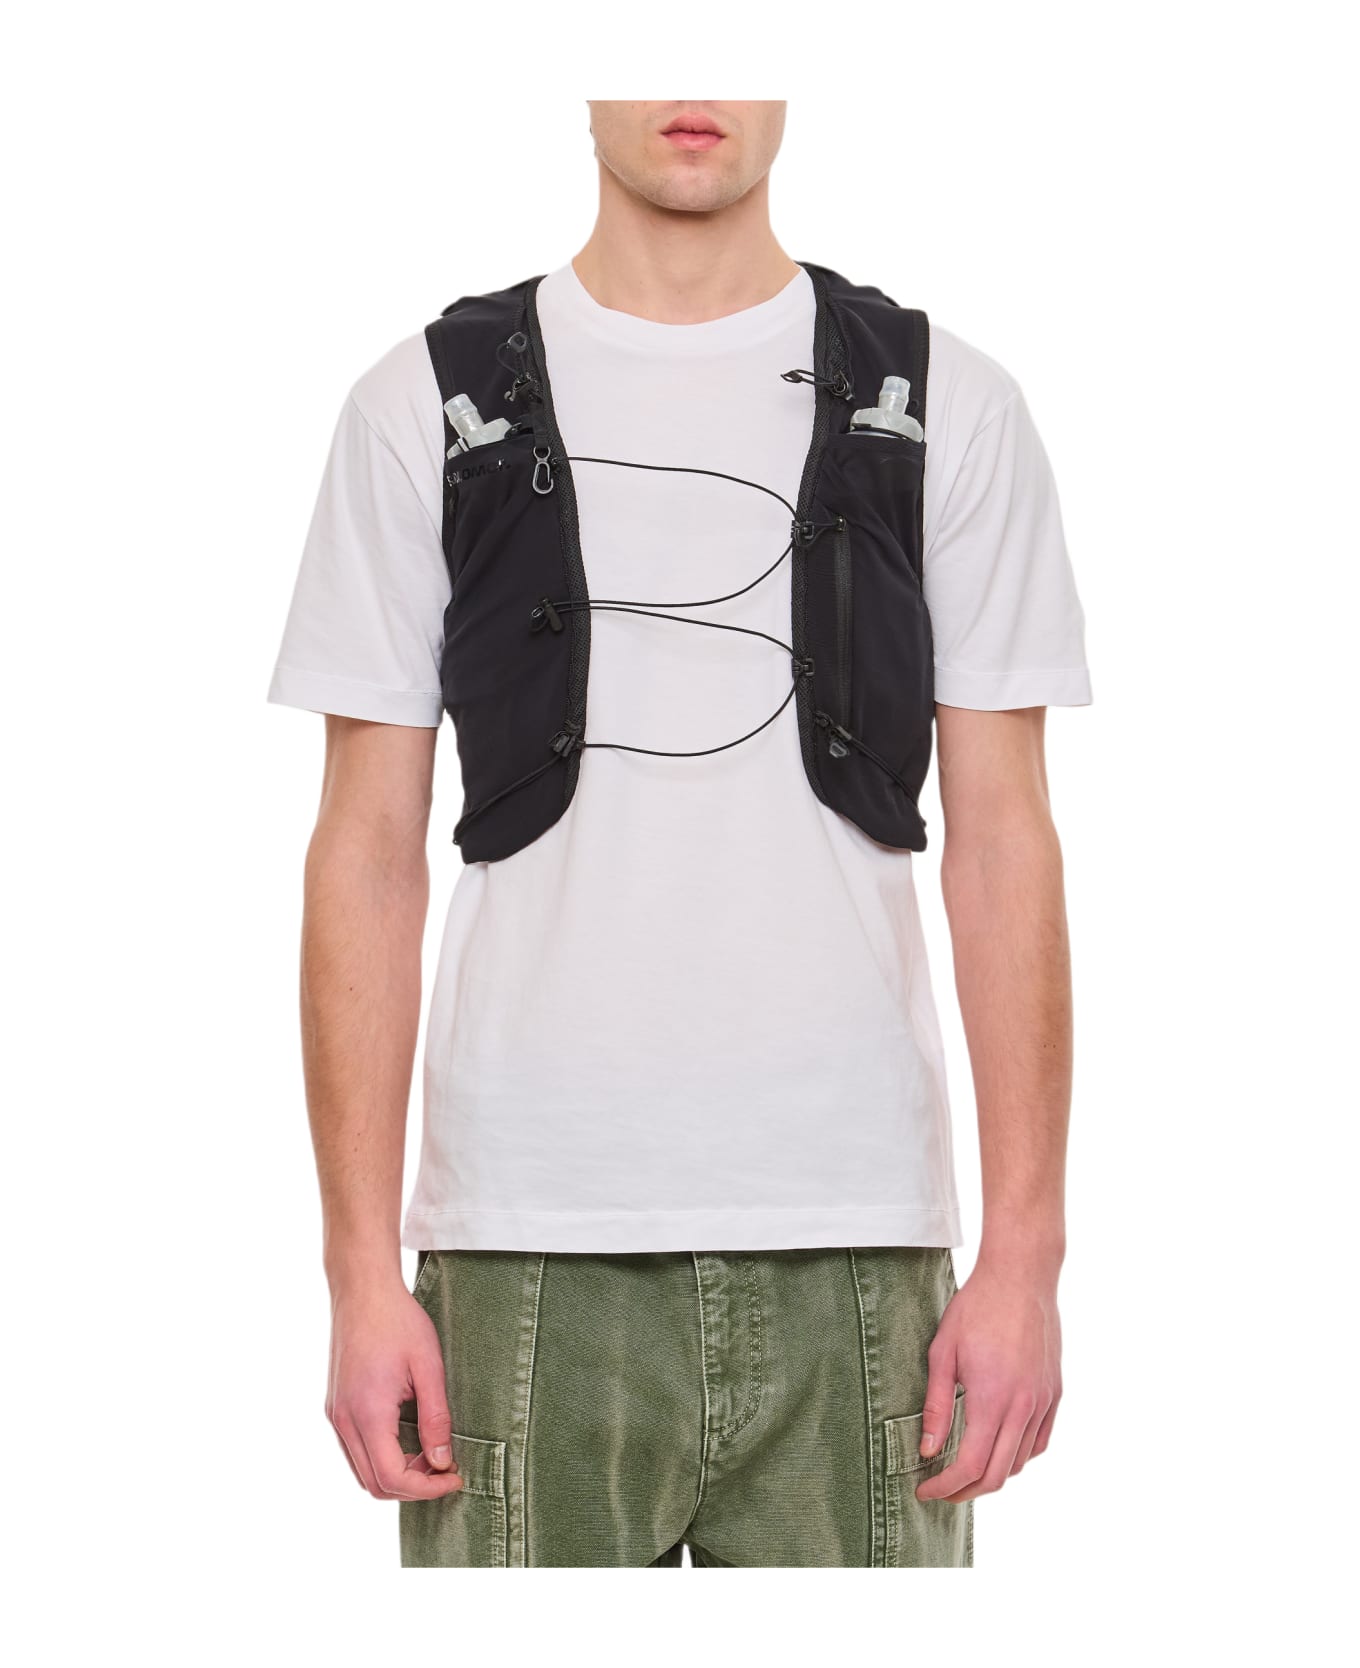 Salomon Acs Skin 5 Set Vest - Black